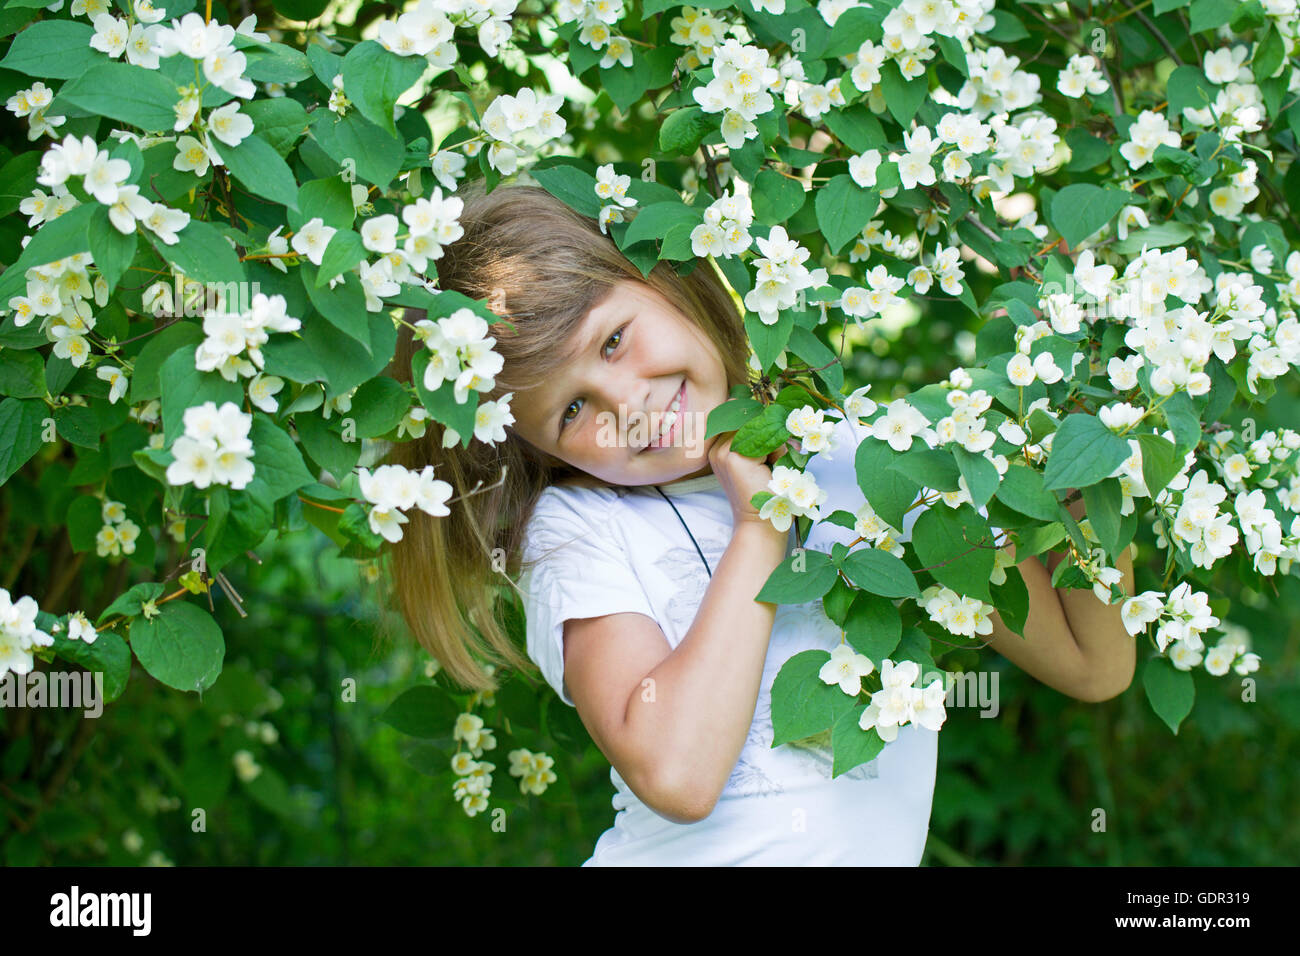 Girl and jasmine flowers Stock Photo - Alamy